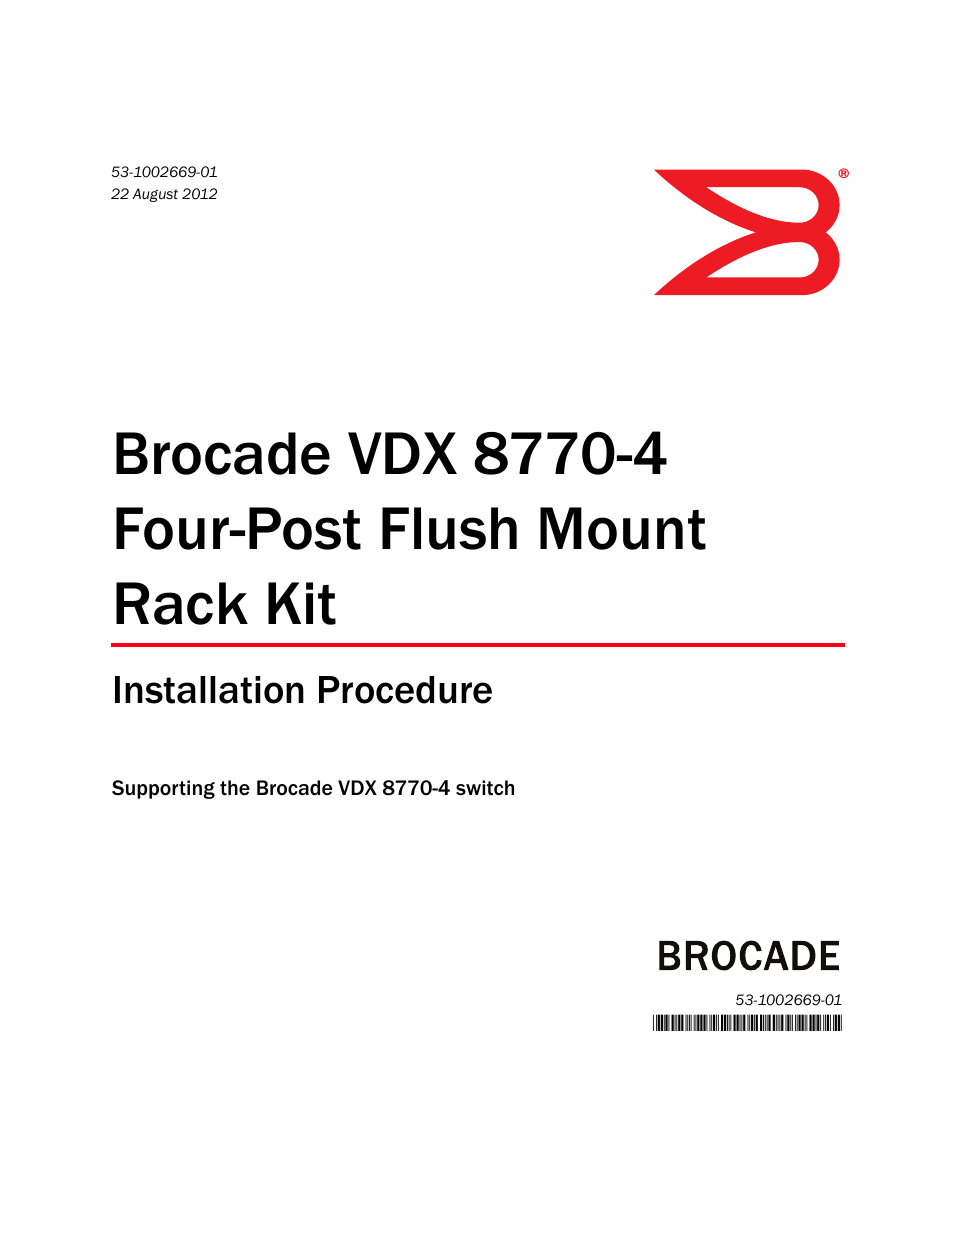 VDX 8770-4 Four-Post Flush Mount Rack Kit Installation Procedure